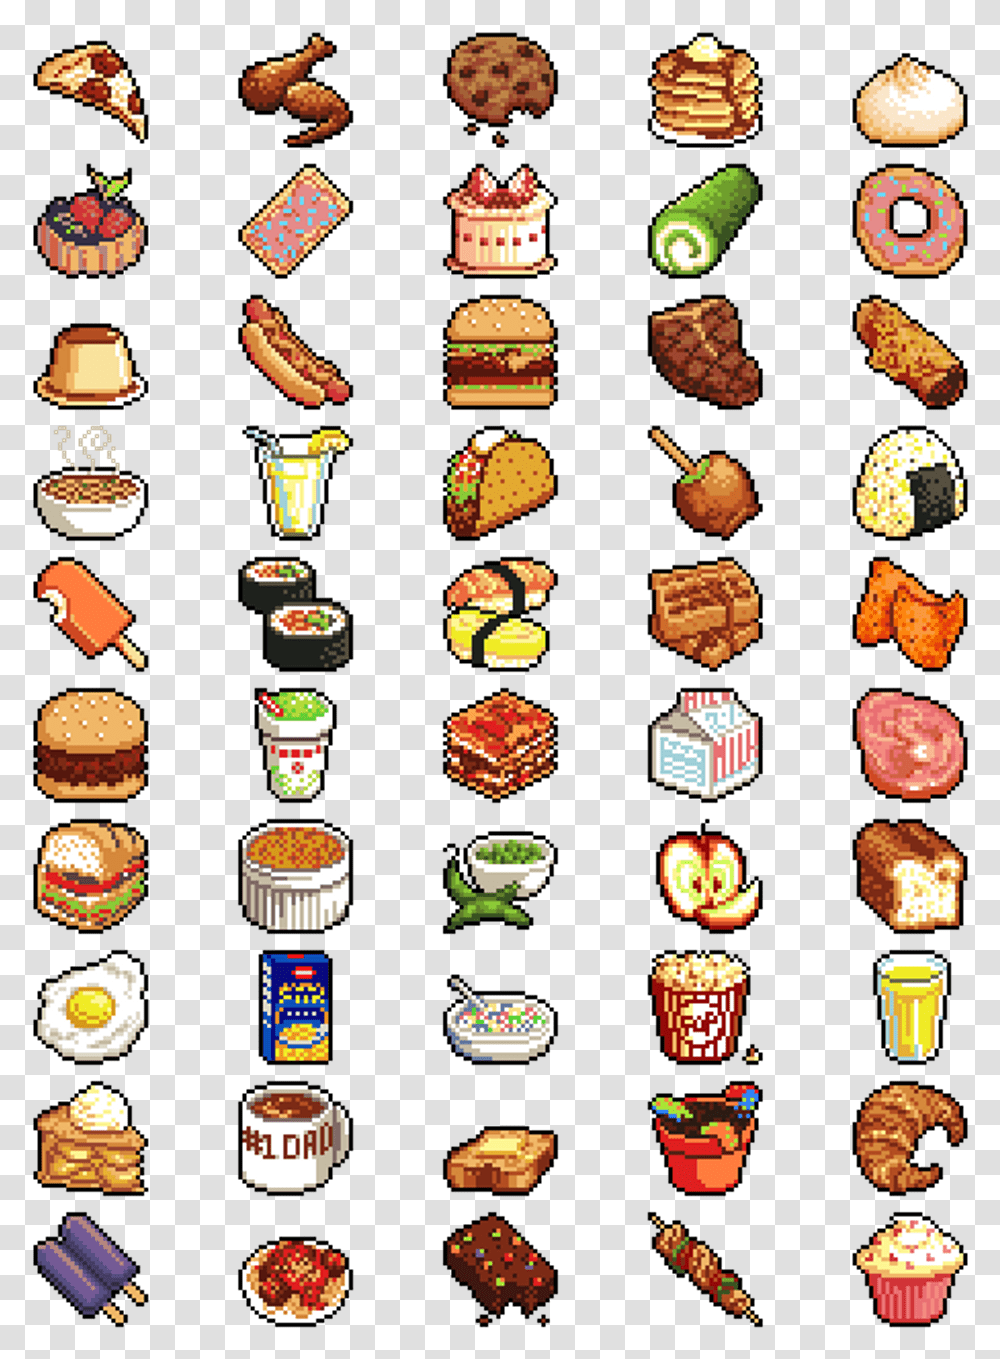 Food Pixel And Tumblr Image Pixel Food Art, Tin, Snack, Can Transparent Png